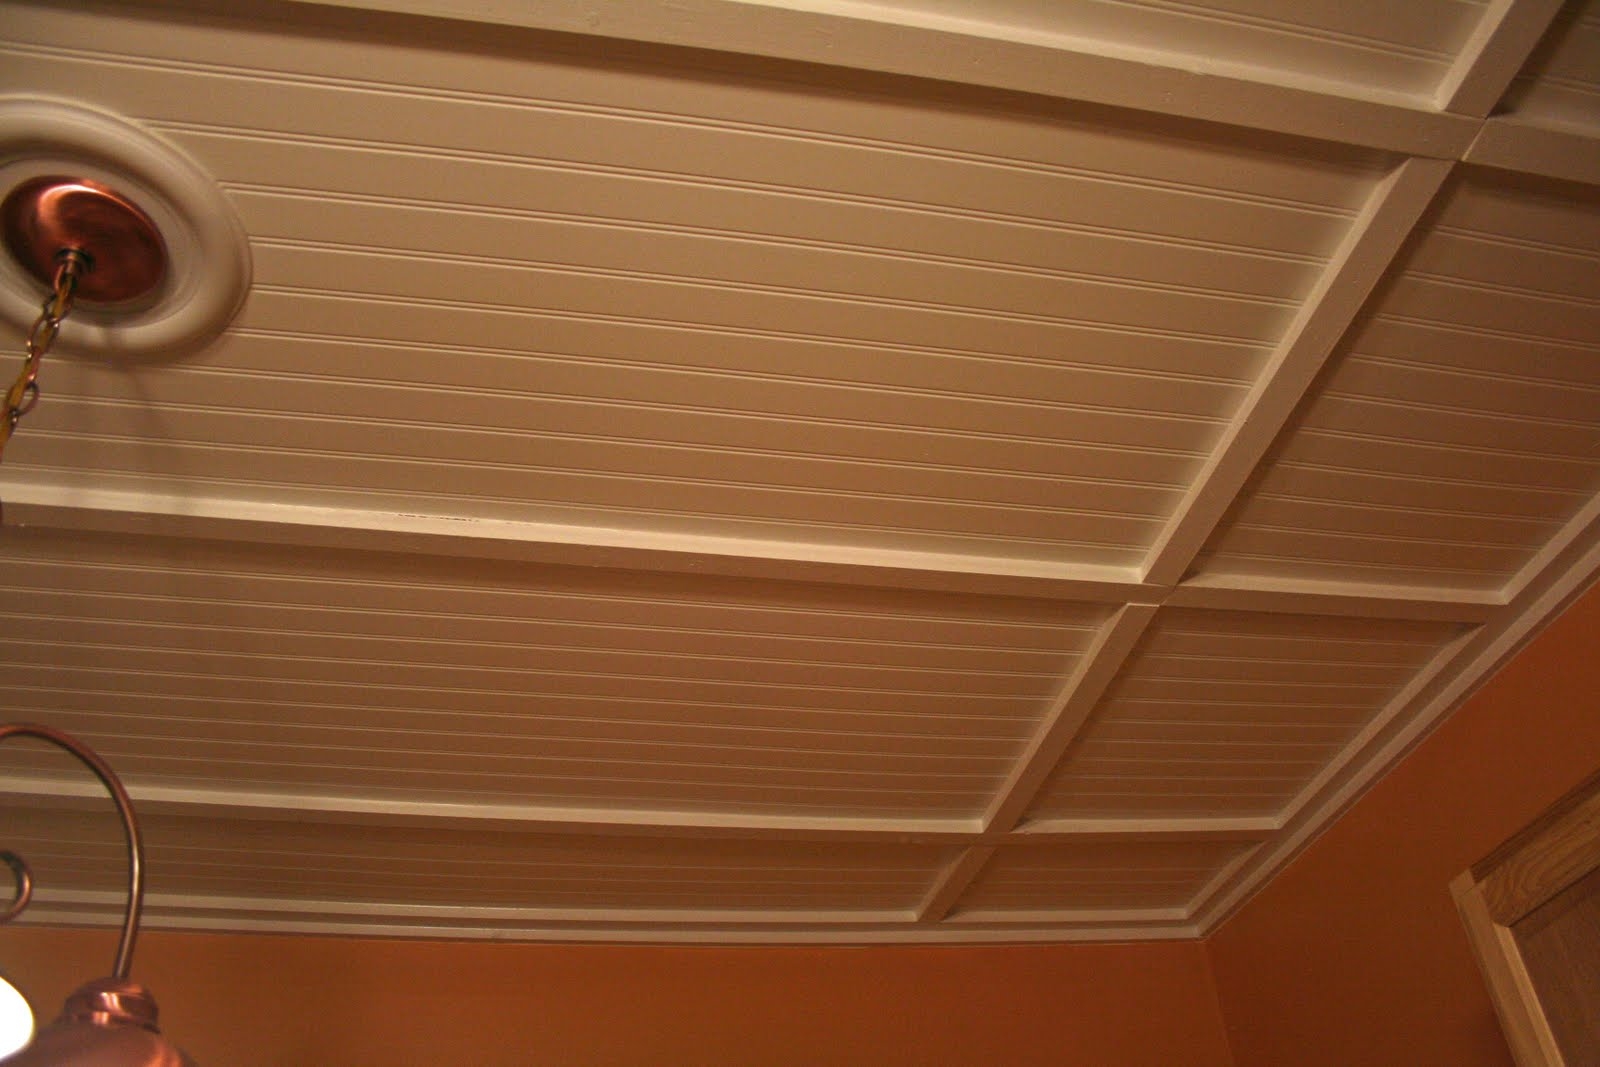 Ceiling Tiles Look Like Wood Ceiling Tiles Look Like Wood making wood ceiling tiles modern ceiling design modern ceiling 1600 X 1067